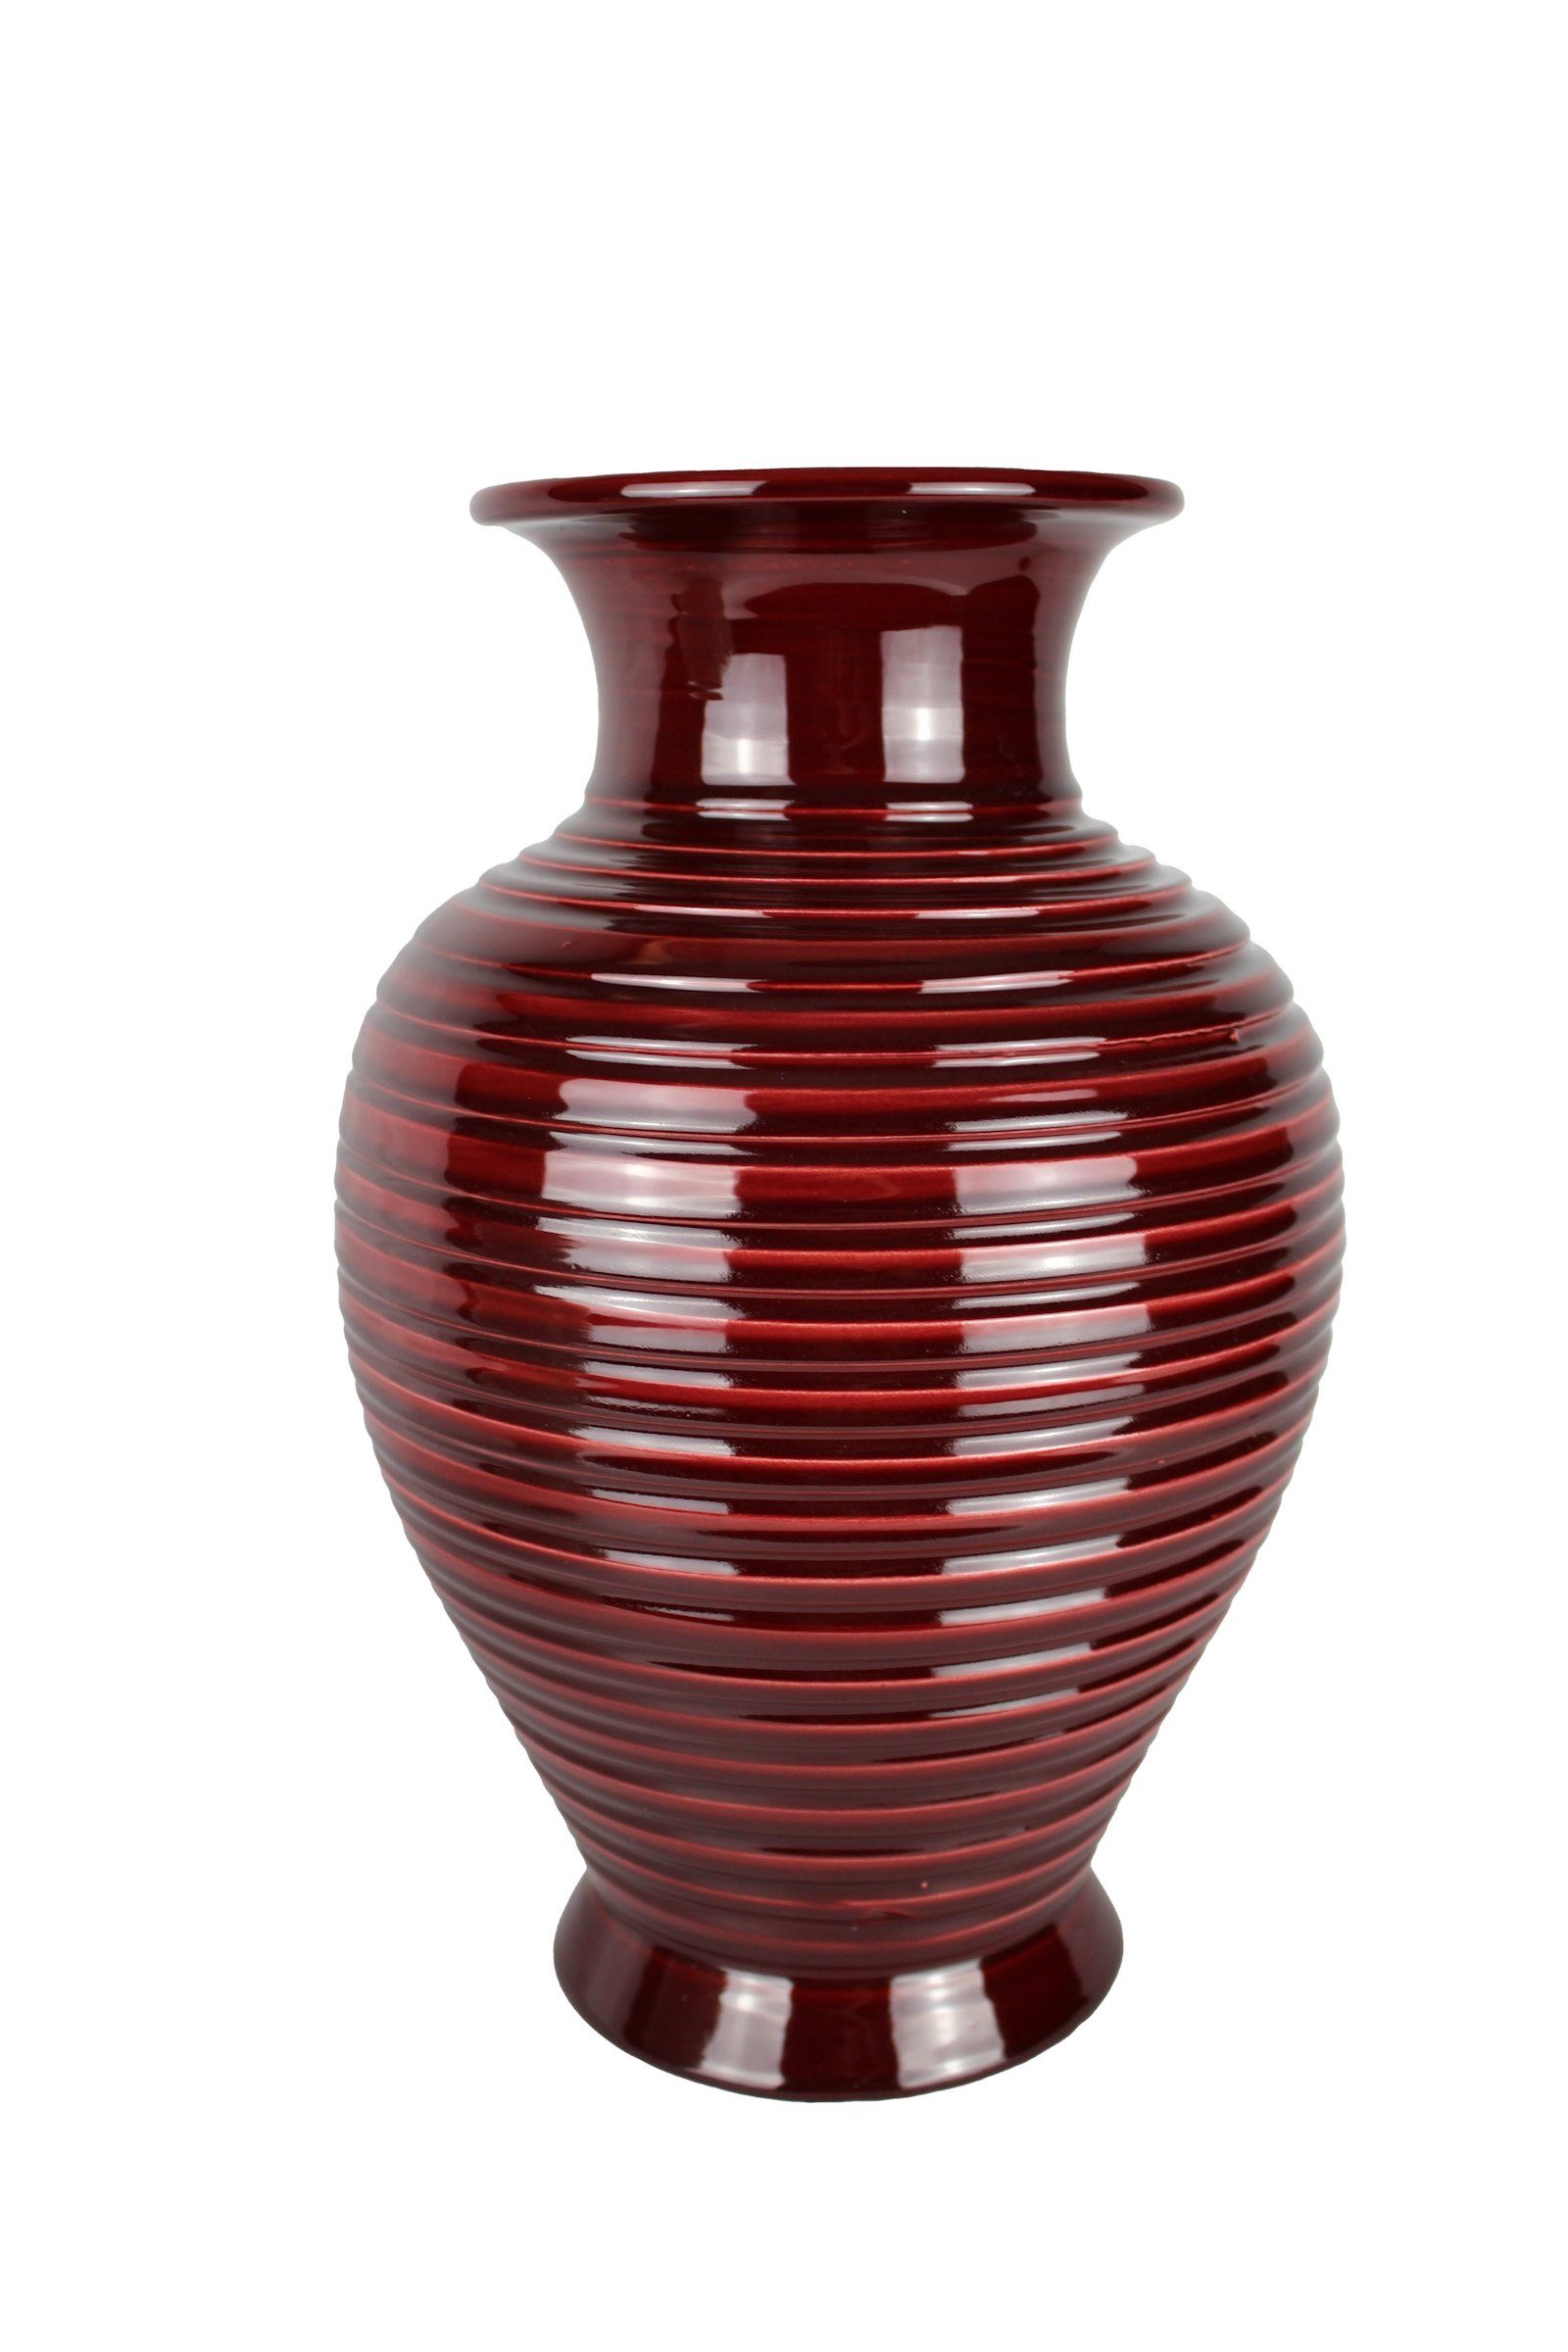 Signature Home Collection Dekovase Vase Keramik schwarz 36 cm mit Ringmuster (1 Stück, 1 Keramikvase), Handgefertigte Keramik aus Italien rot